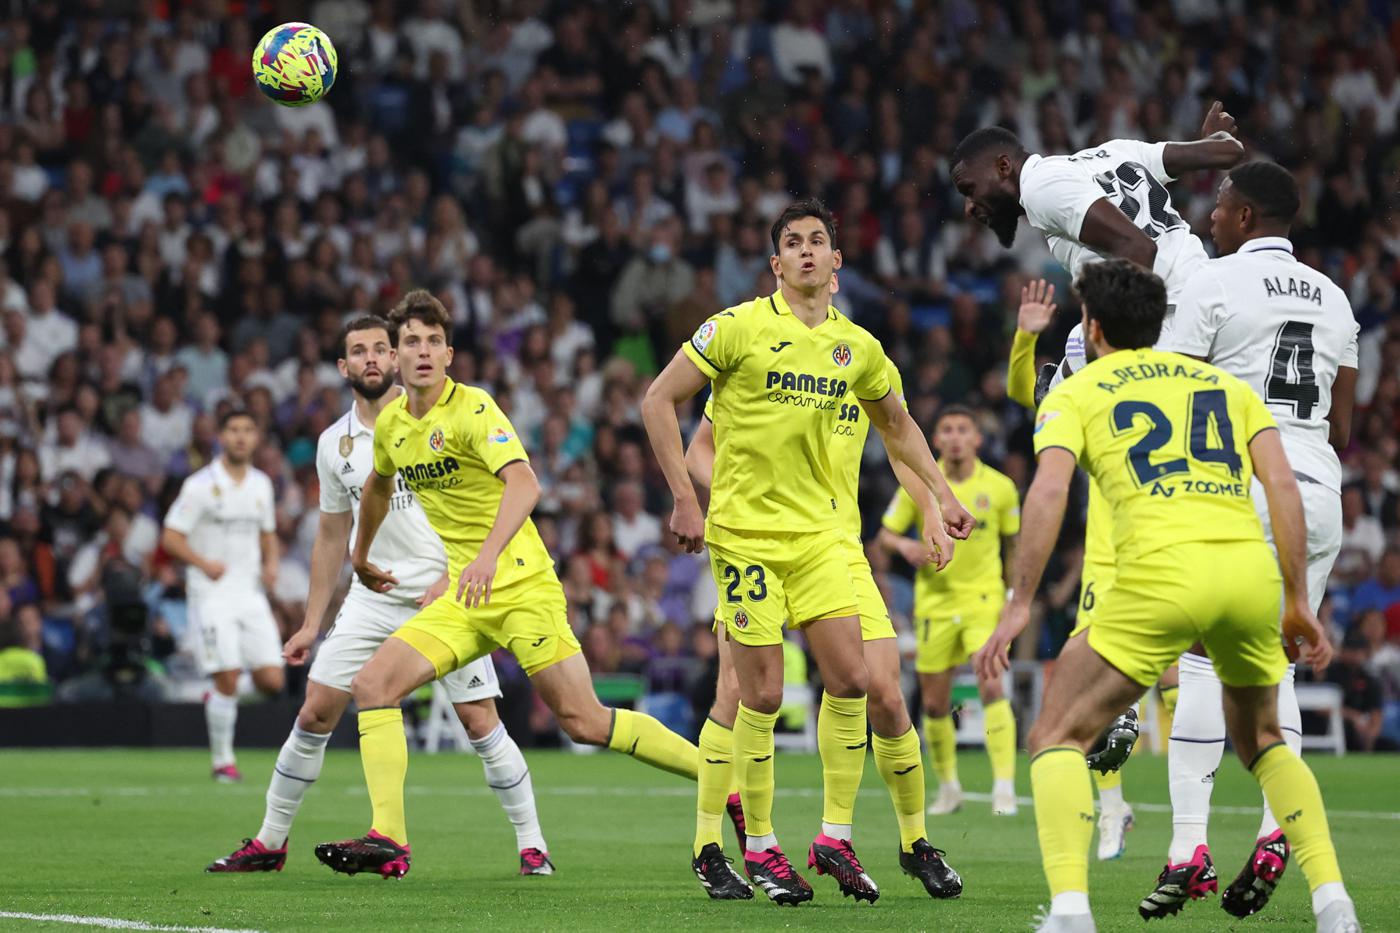 Real Madrid vs Villarreal - 2:3. Spain Championship, 28th round. Match review, statistics